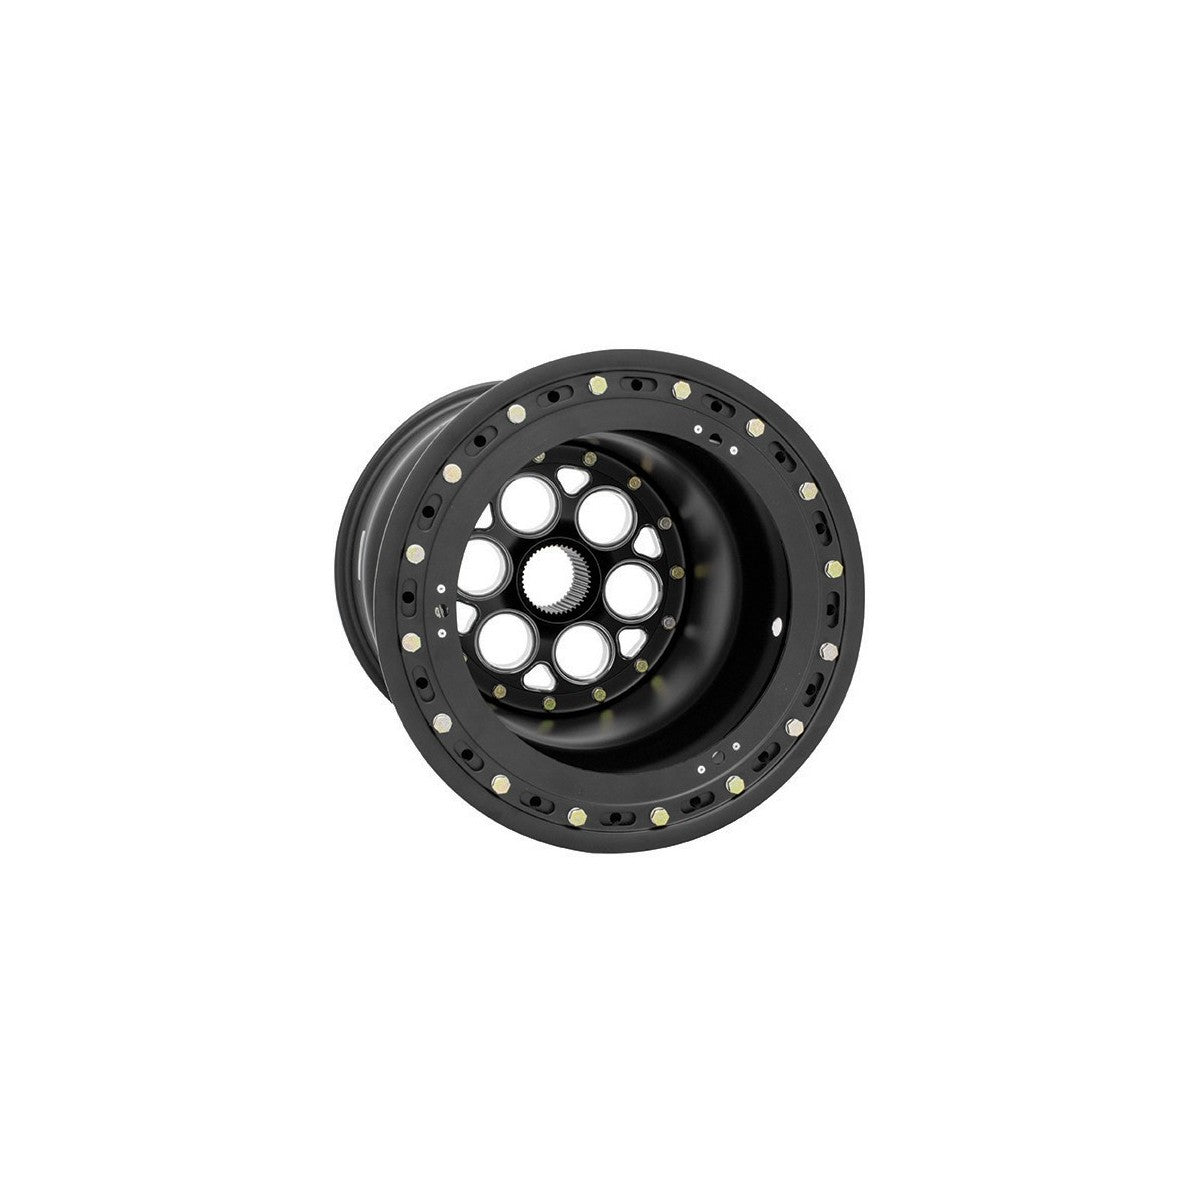 Weld 735B-51746-6 Magnum Sprint Wheel 15x17 42-Spline ET0 BS6 Black Center - Polished Shell